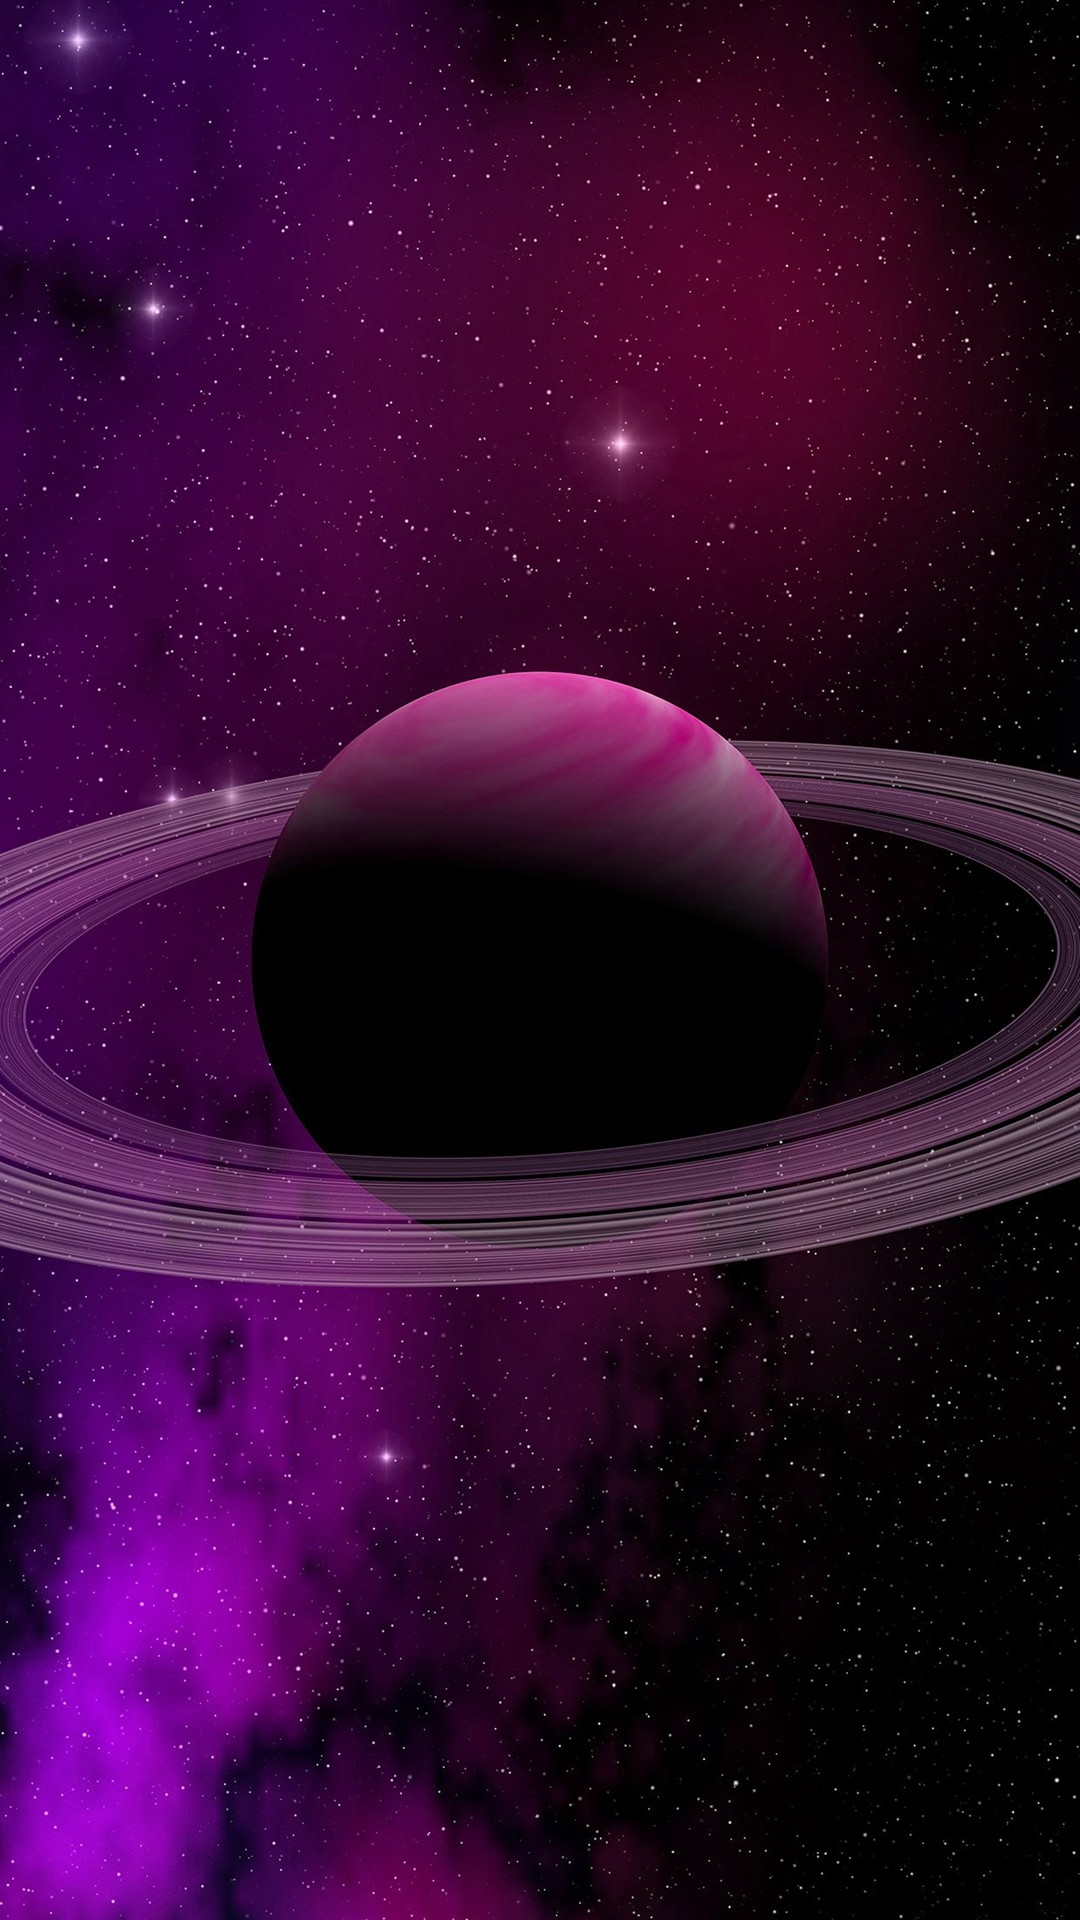 Space Planet Saturn Star Art Illustration Purple #iPhone #6 #wallpaper